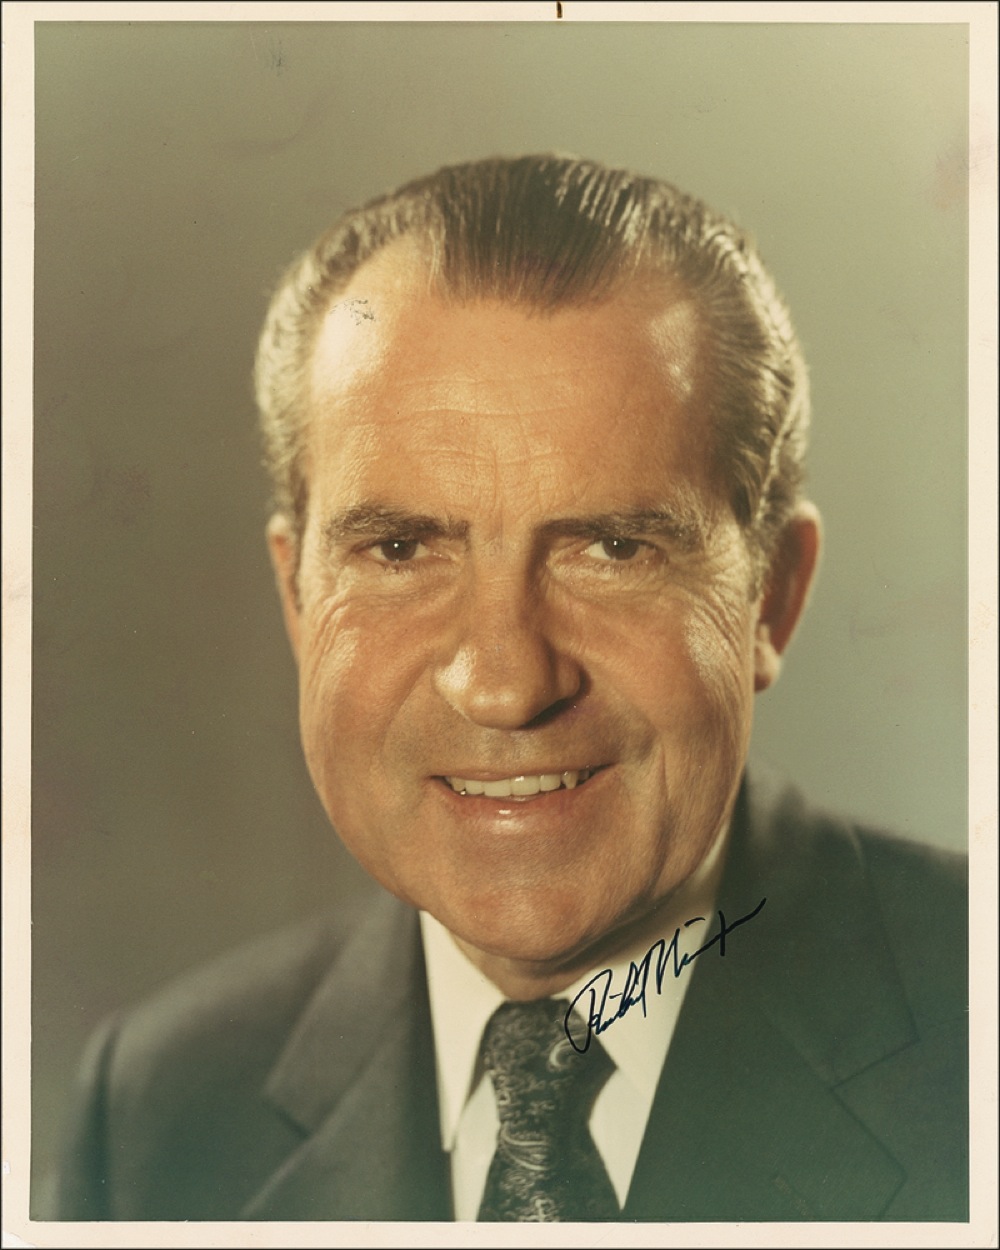 Lot #82 Richard Nixon